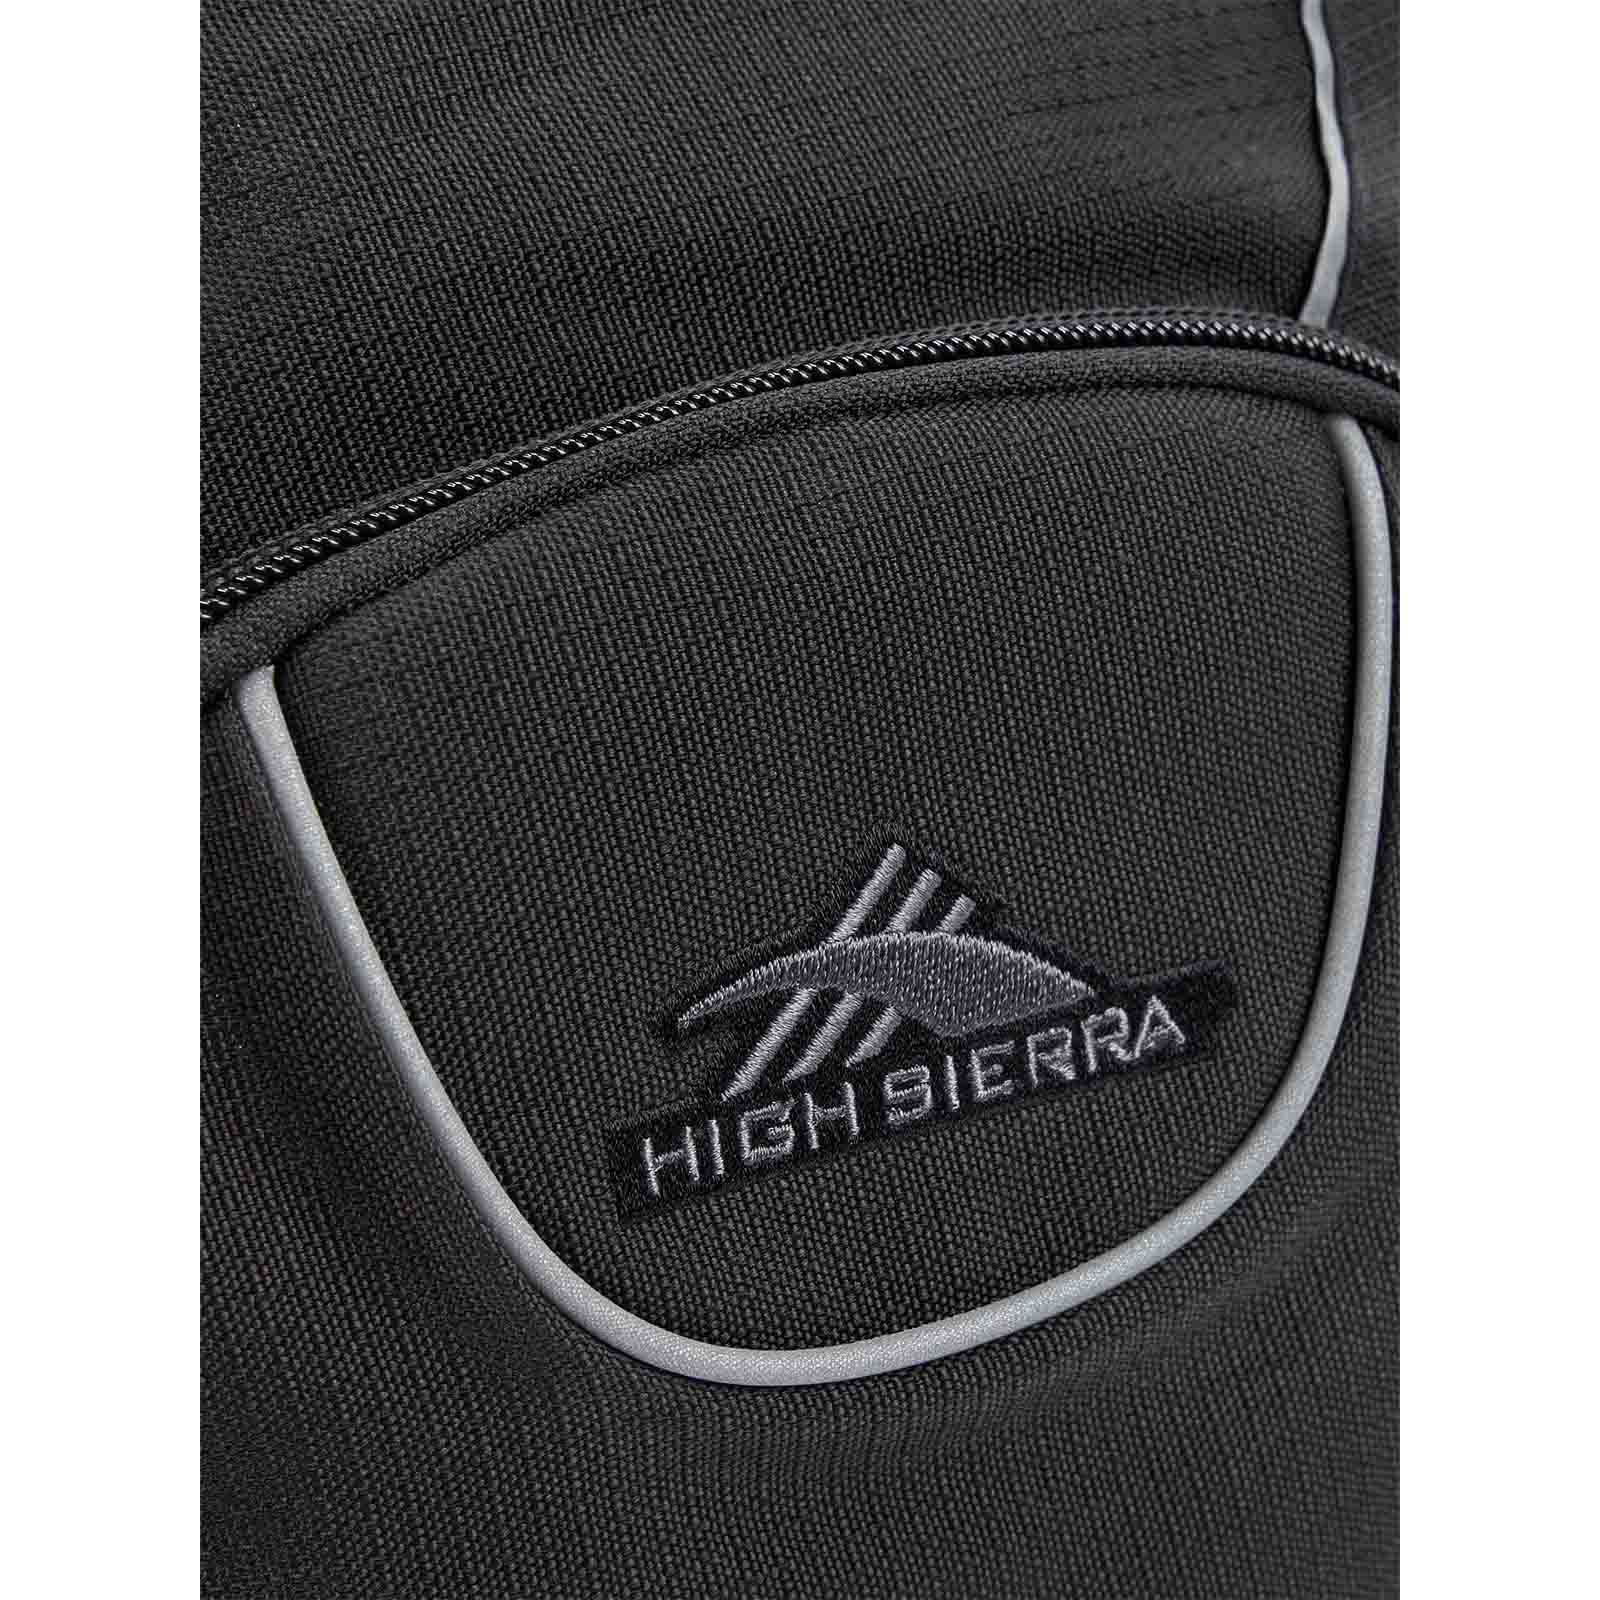 High-Sierra-Academy-3-Eco-15-Inch-Laptop-Backpack-Black-Logo